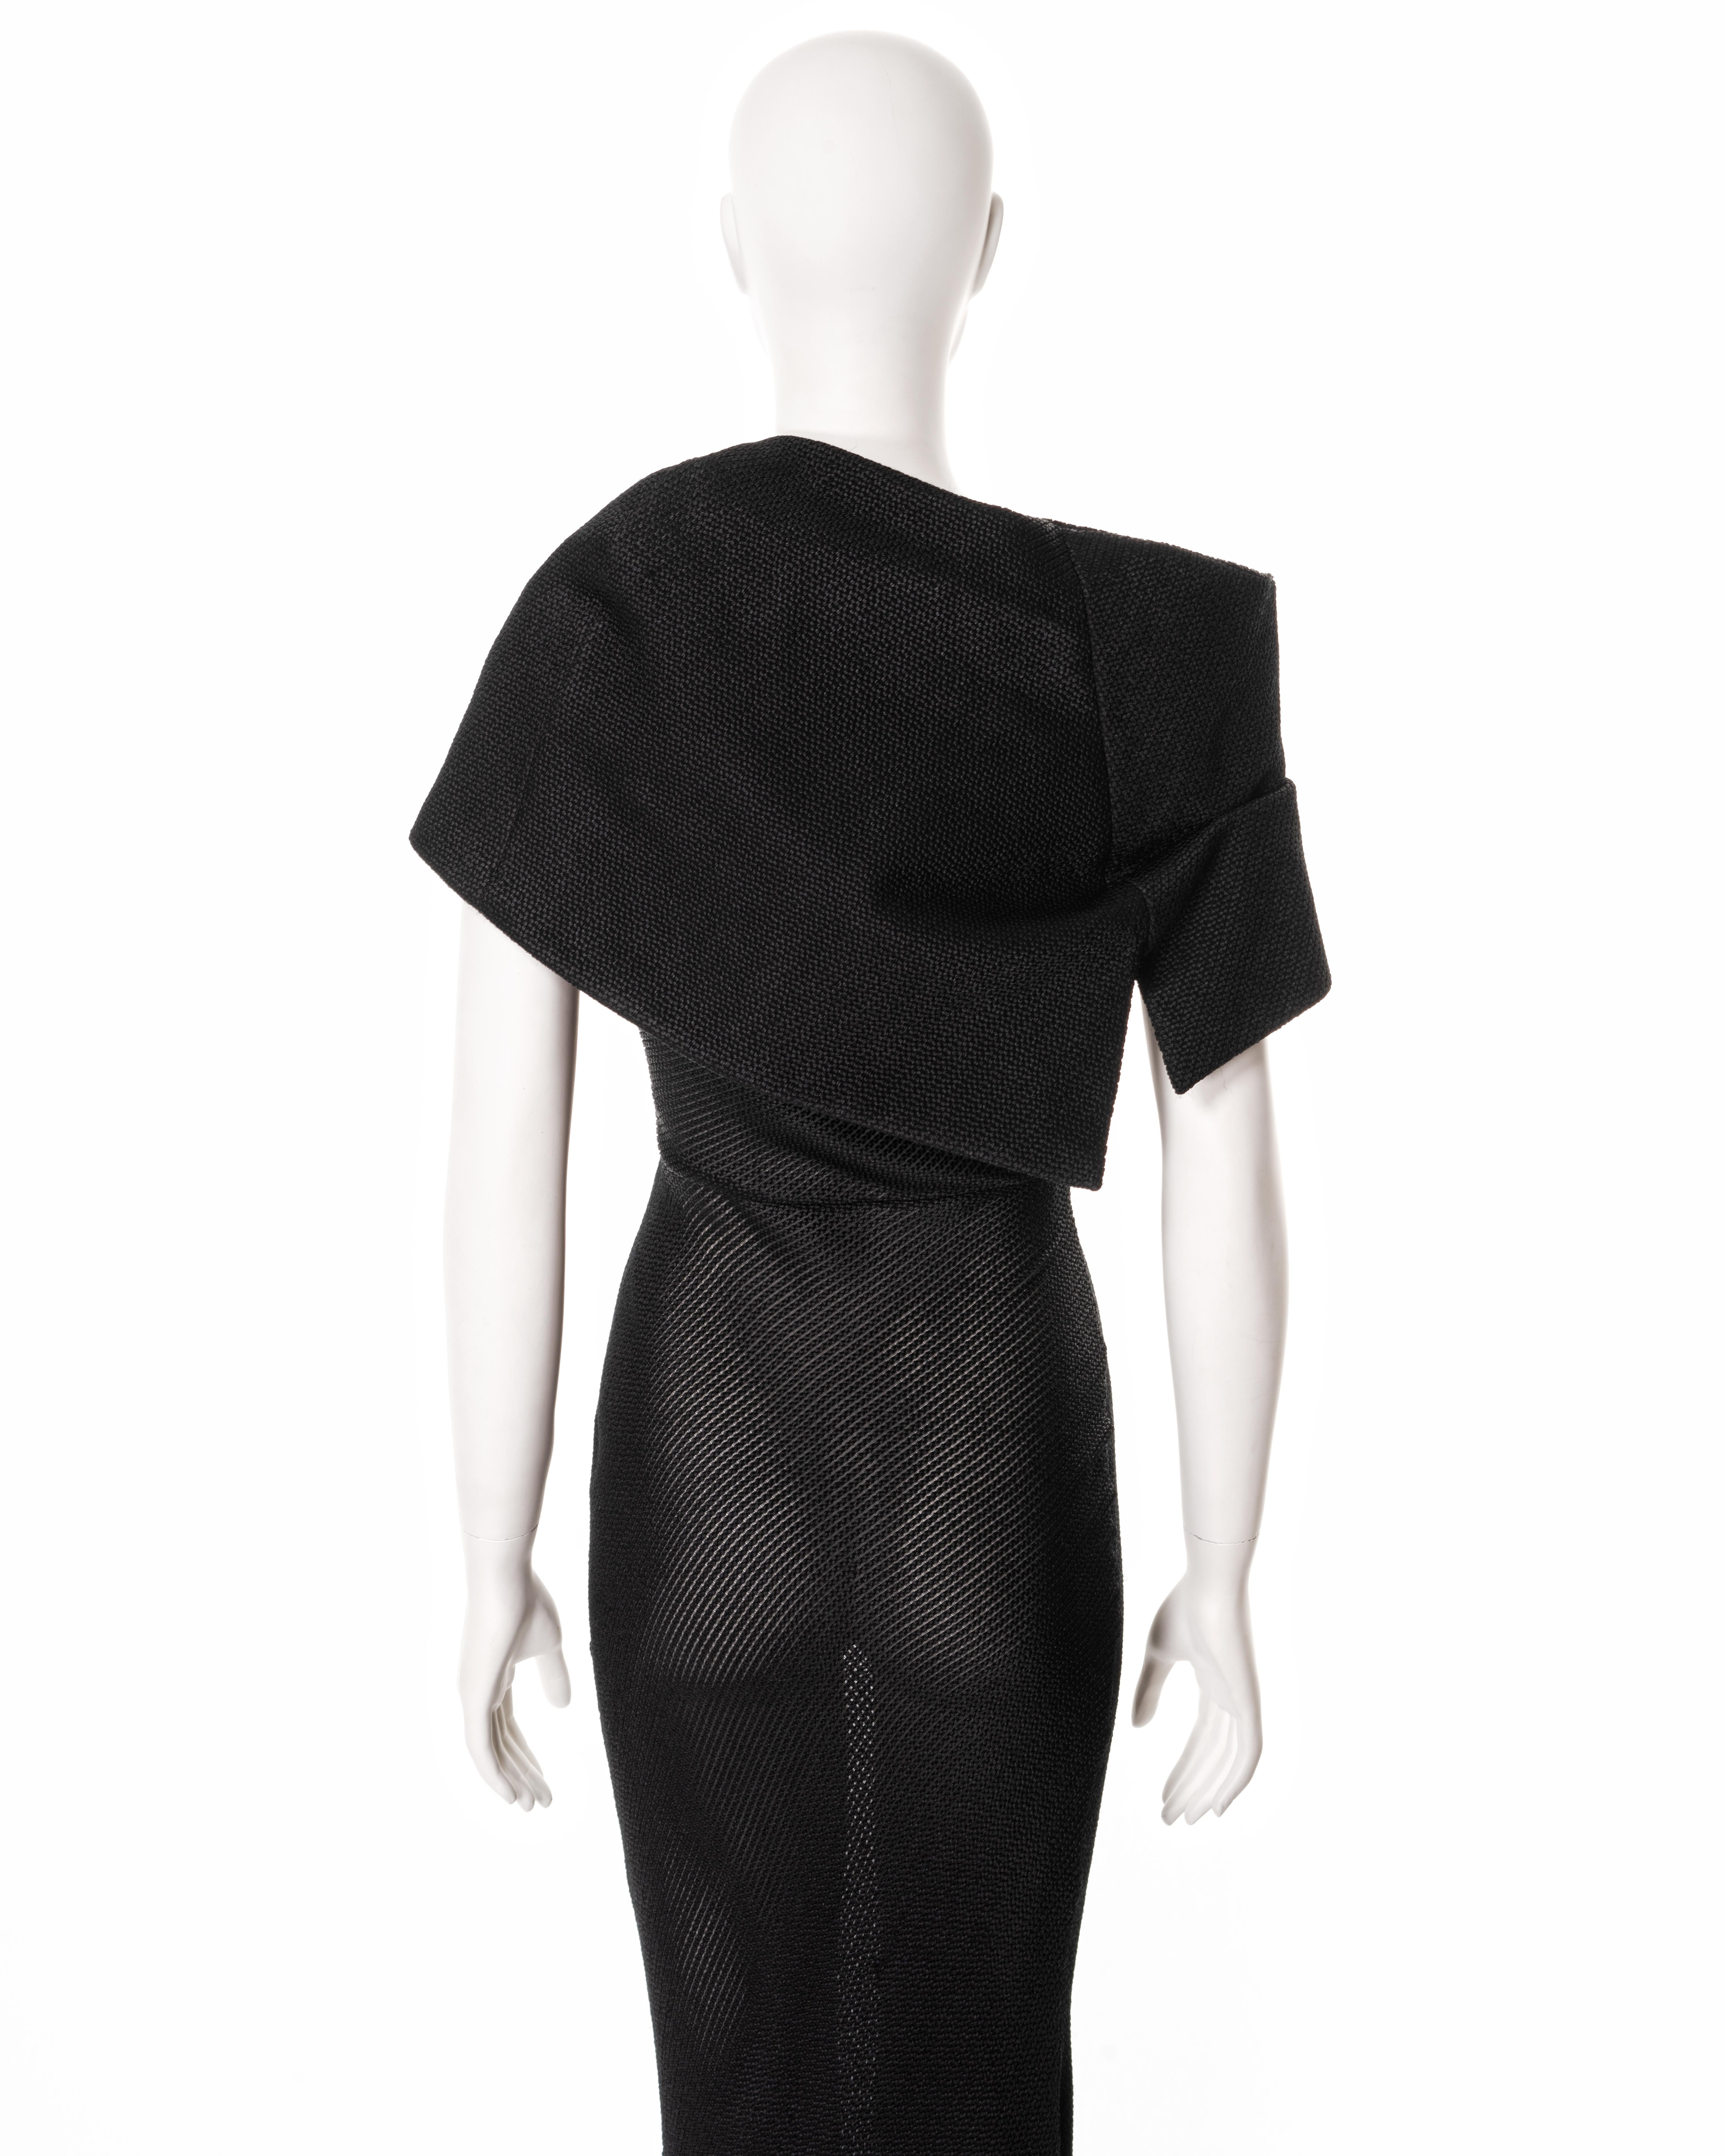 John Galliano black bias-cut viscose evening dress with large collar, fw 1999 For Sale 4